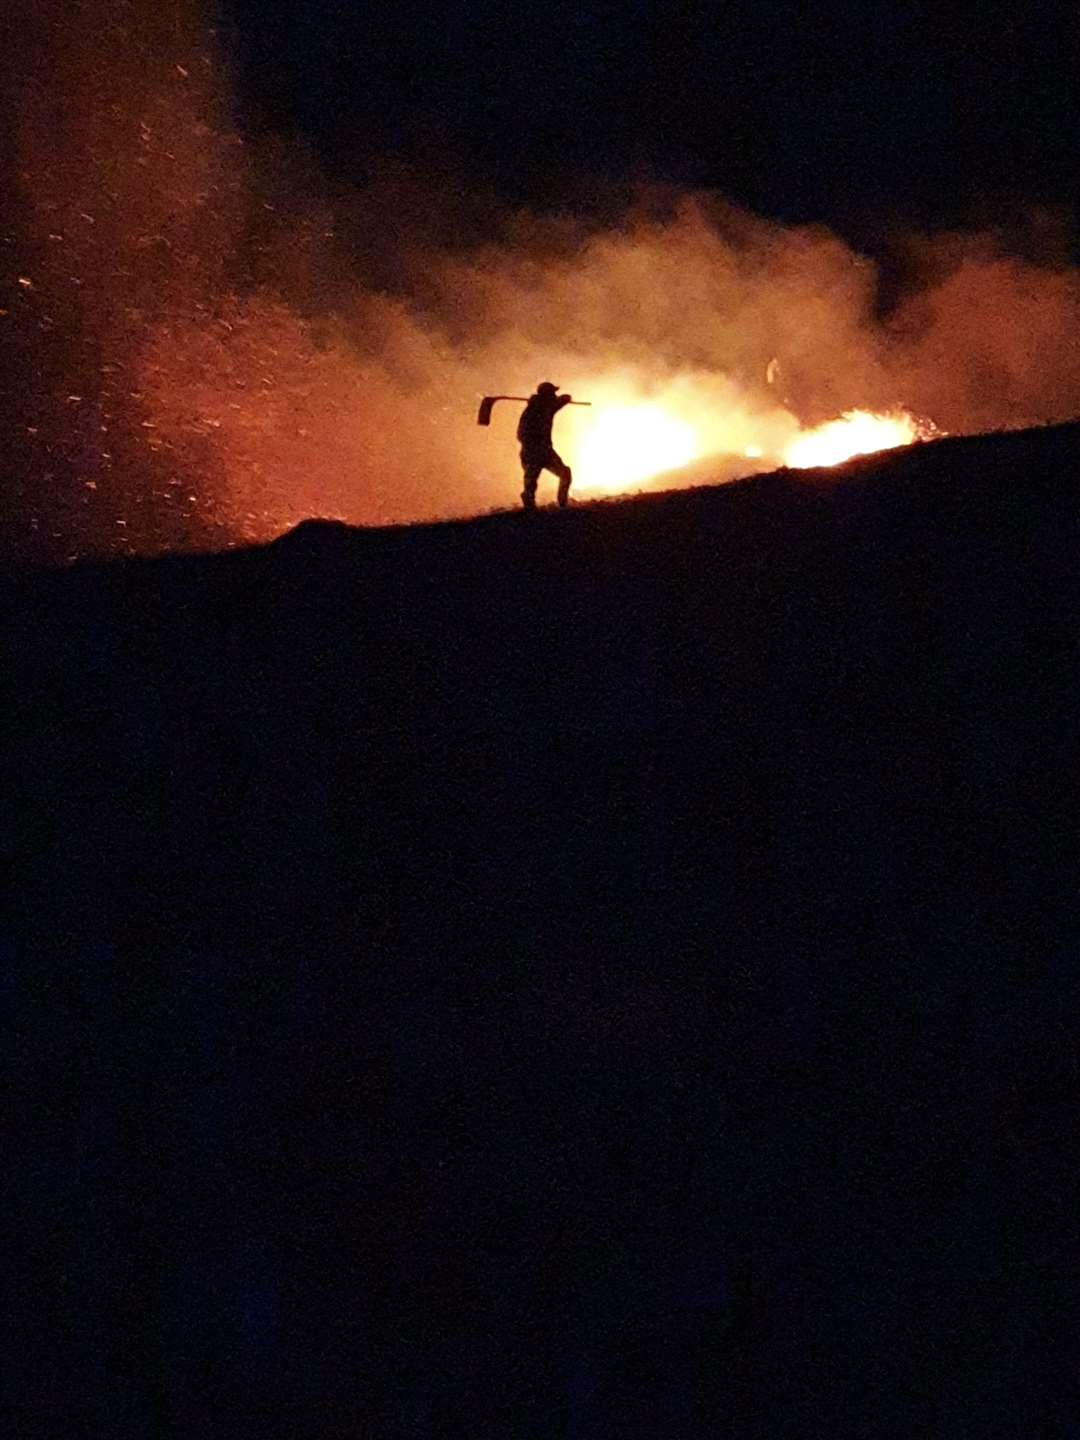 Last night's wildfire.